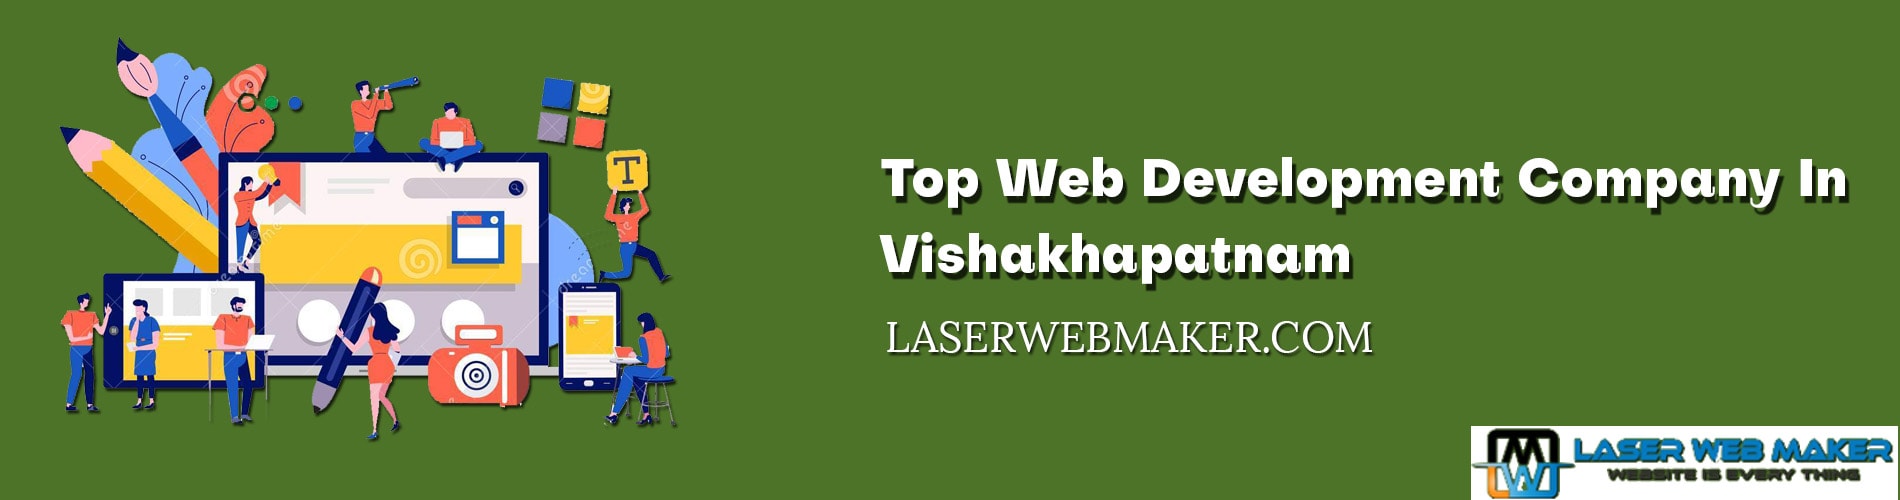 Top Web Development Company In Vishakhapatnam